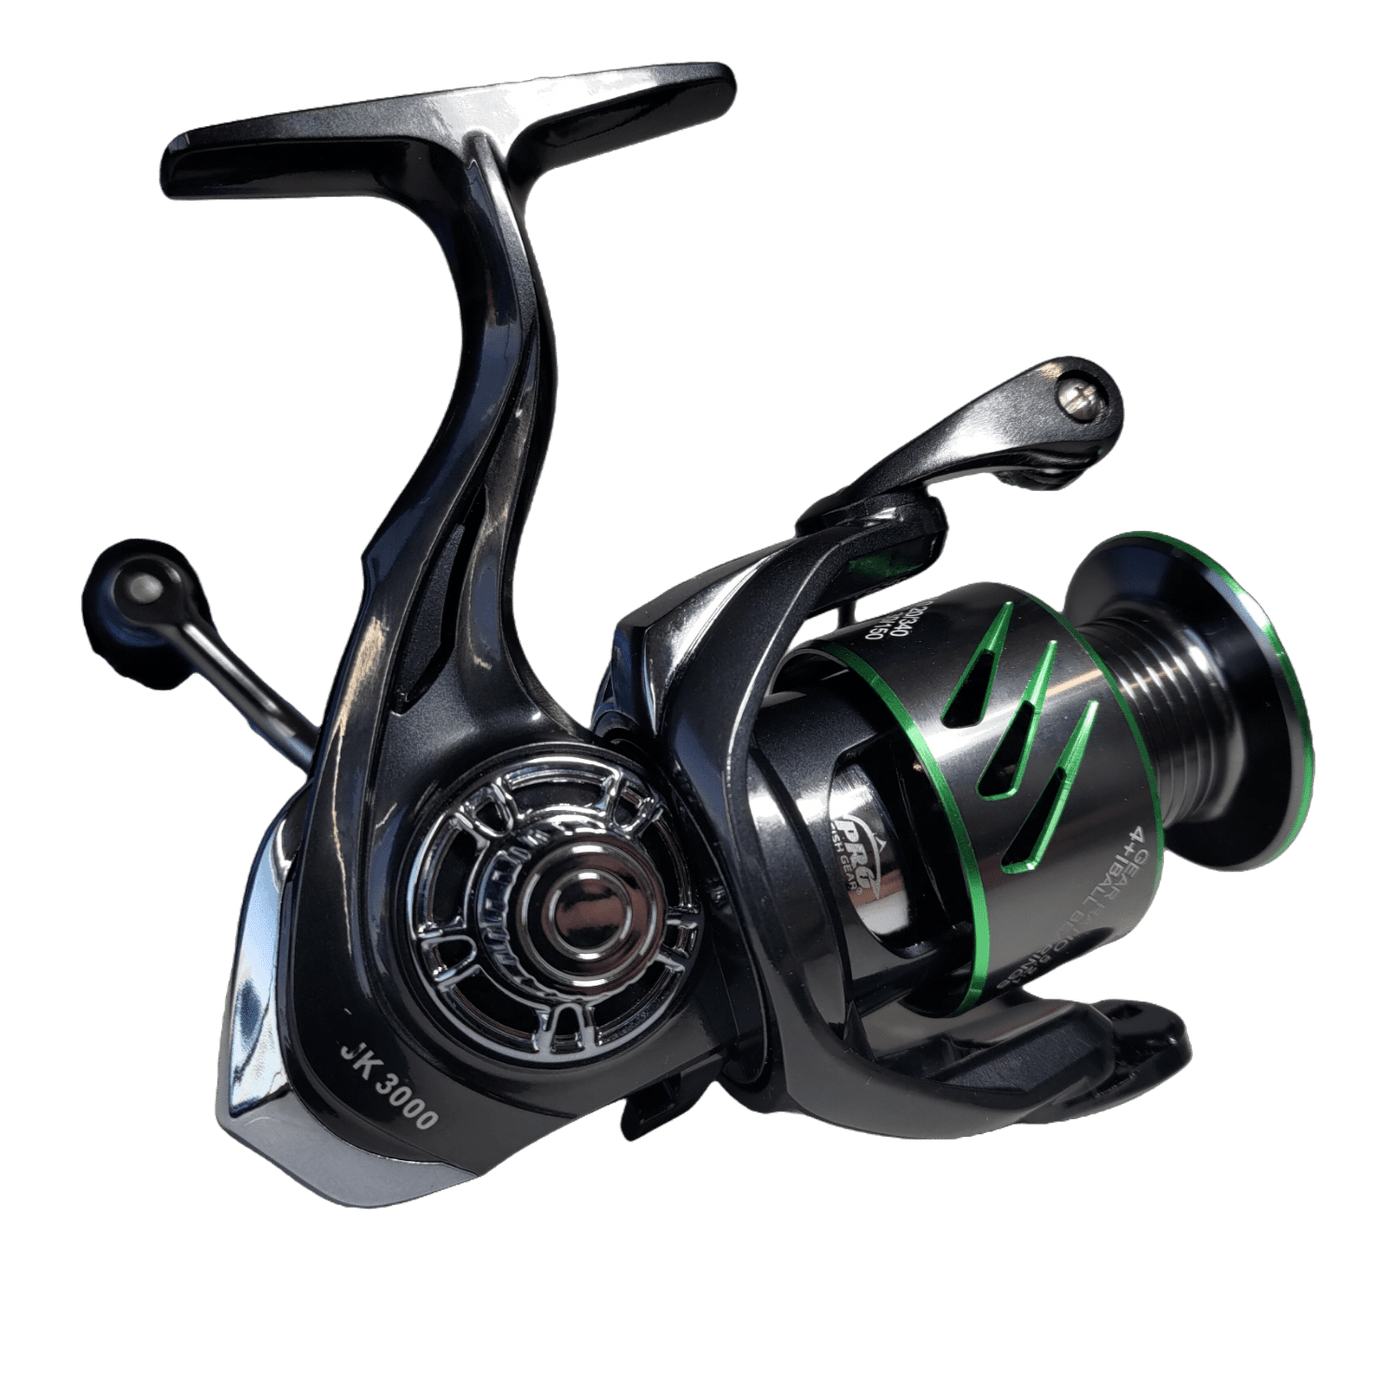 JK Series Spinning Reel Fishing Reel Pro Fish Gear 